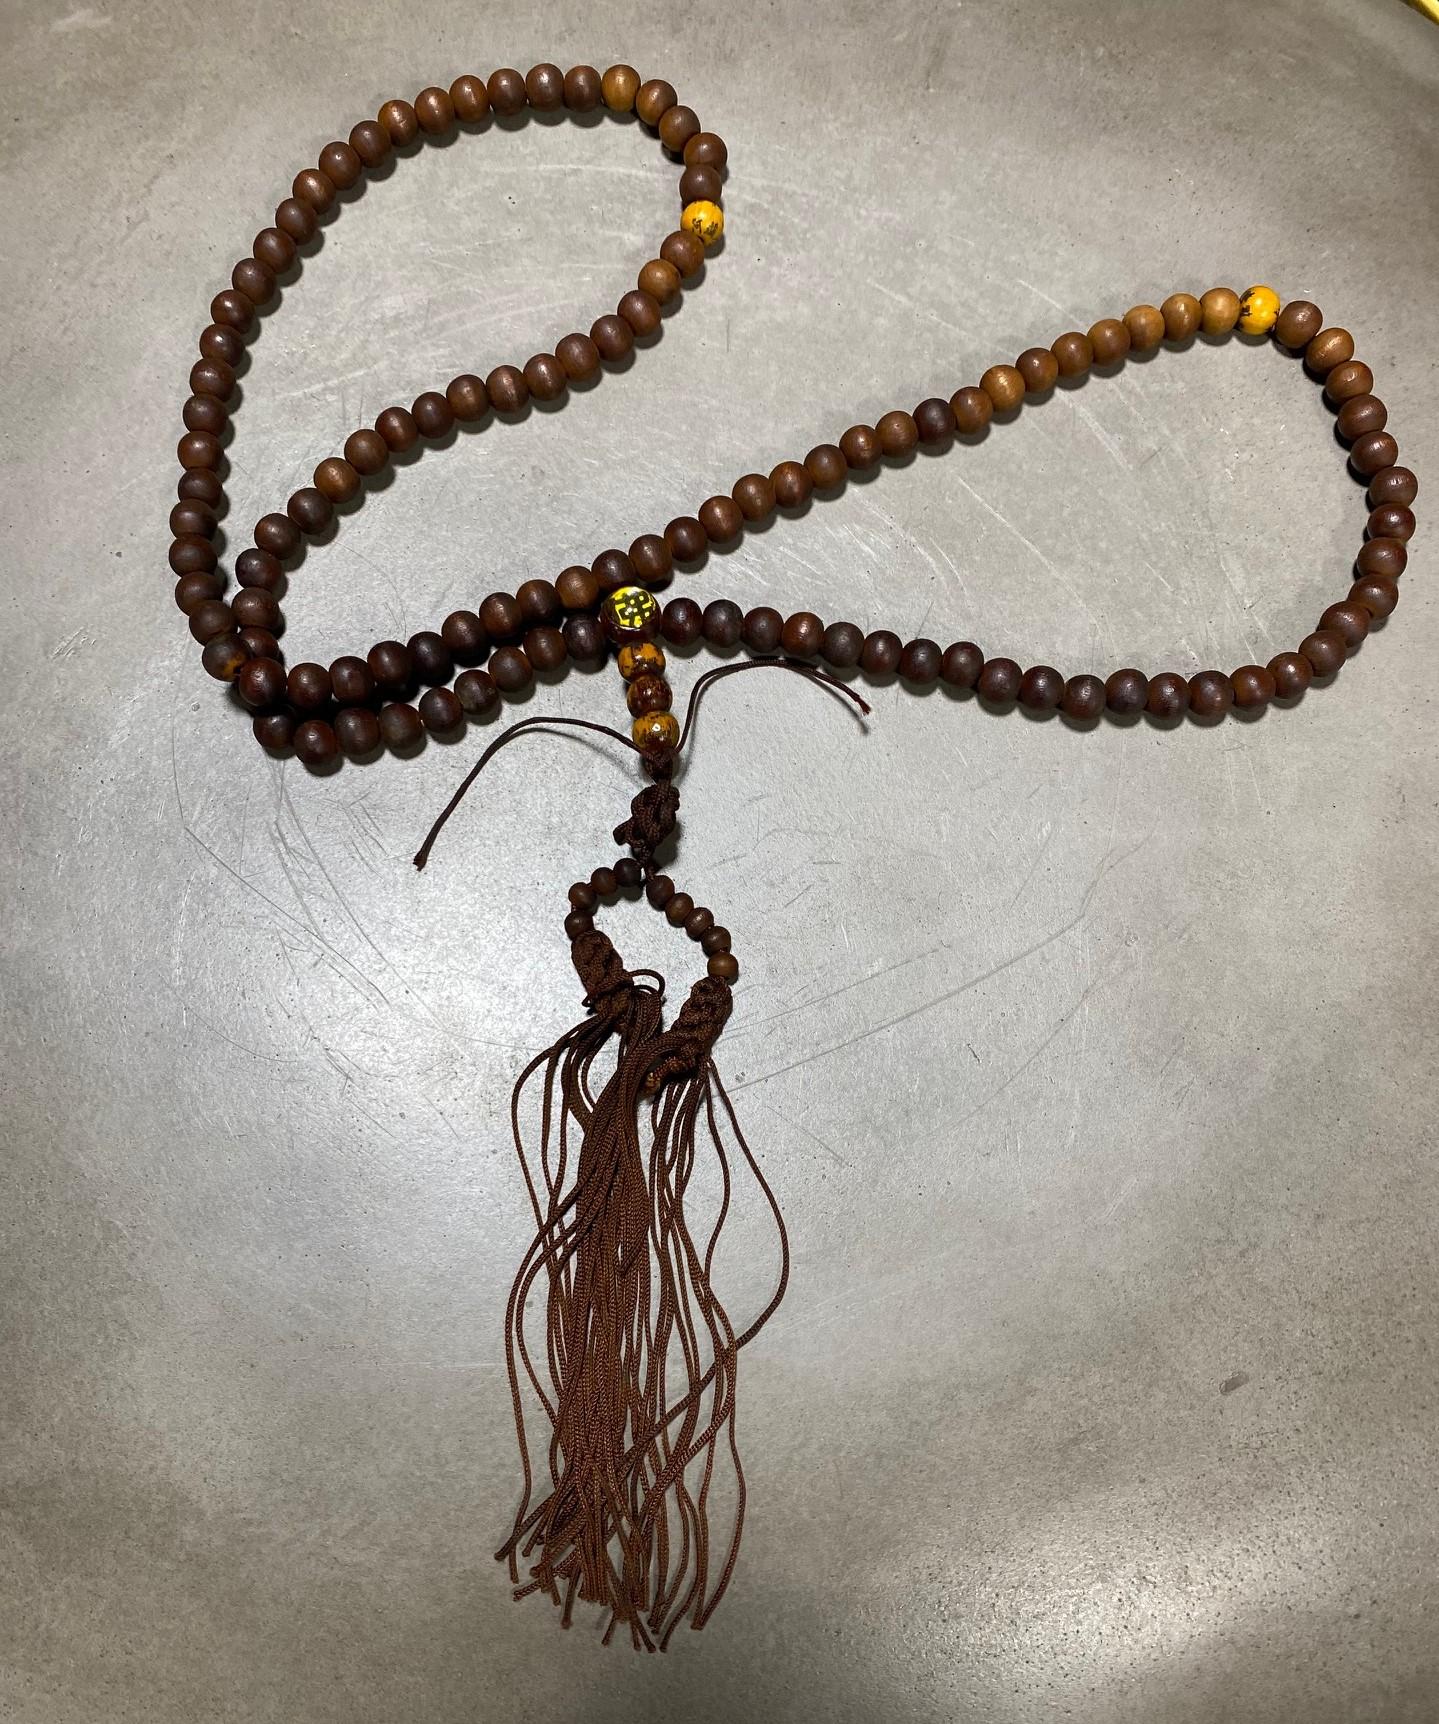 Japanese Temple Shrine Buddhist Monk Juzu Prayer Beads Mala Rosary Necklace  3